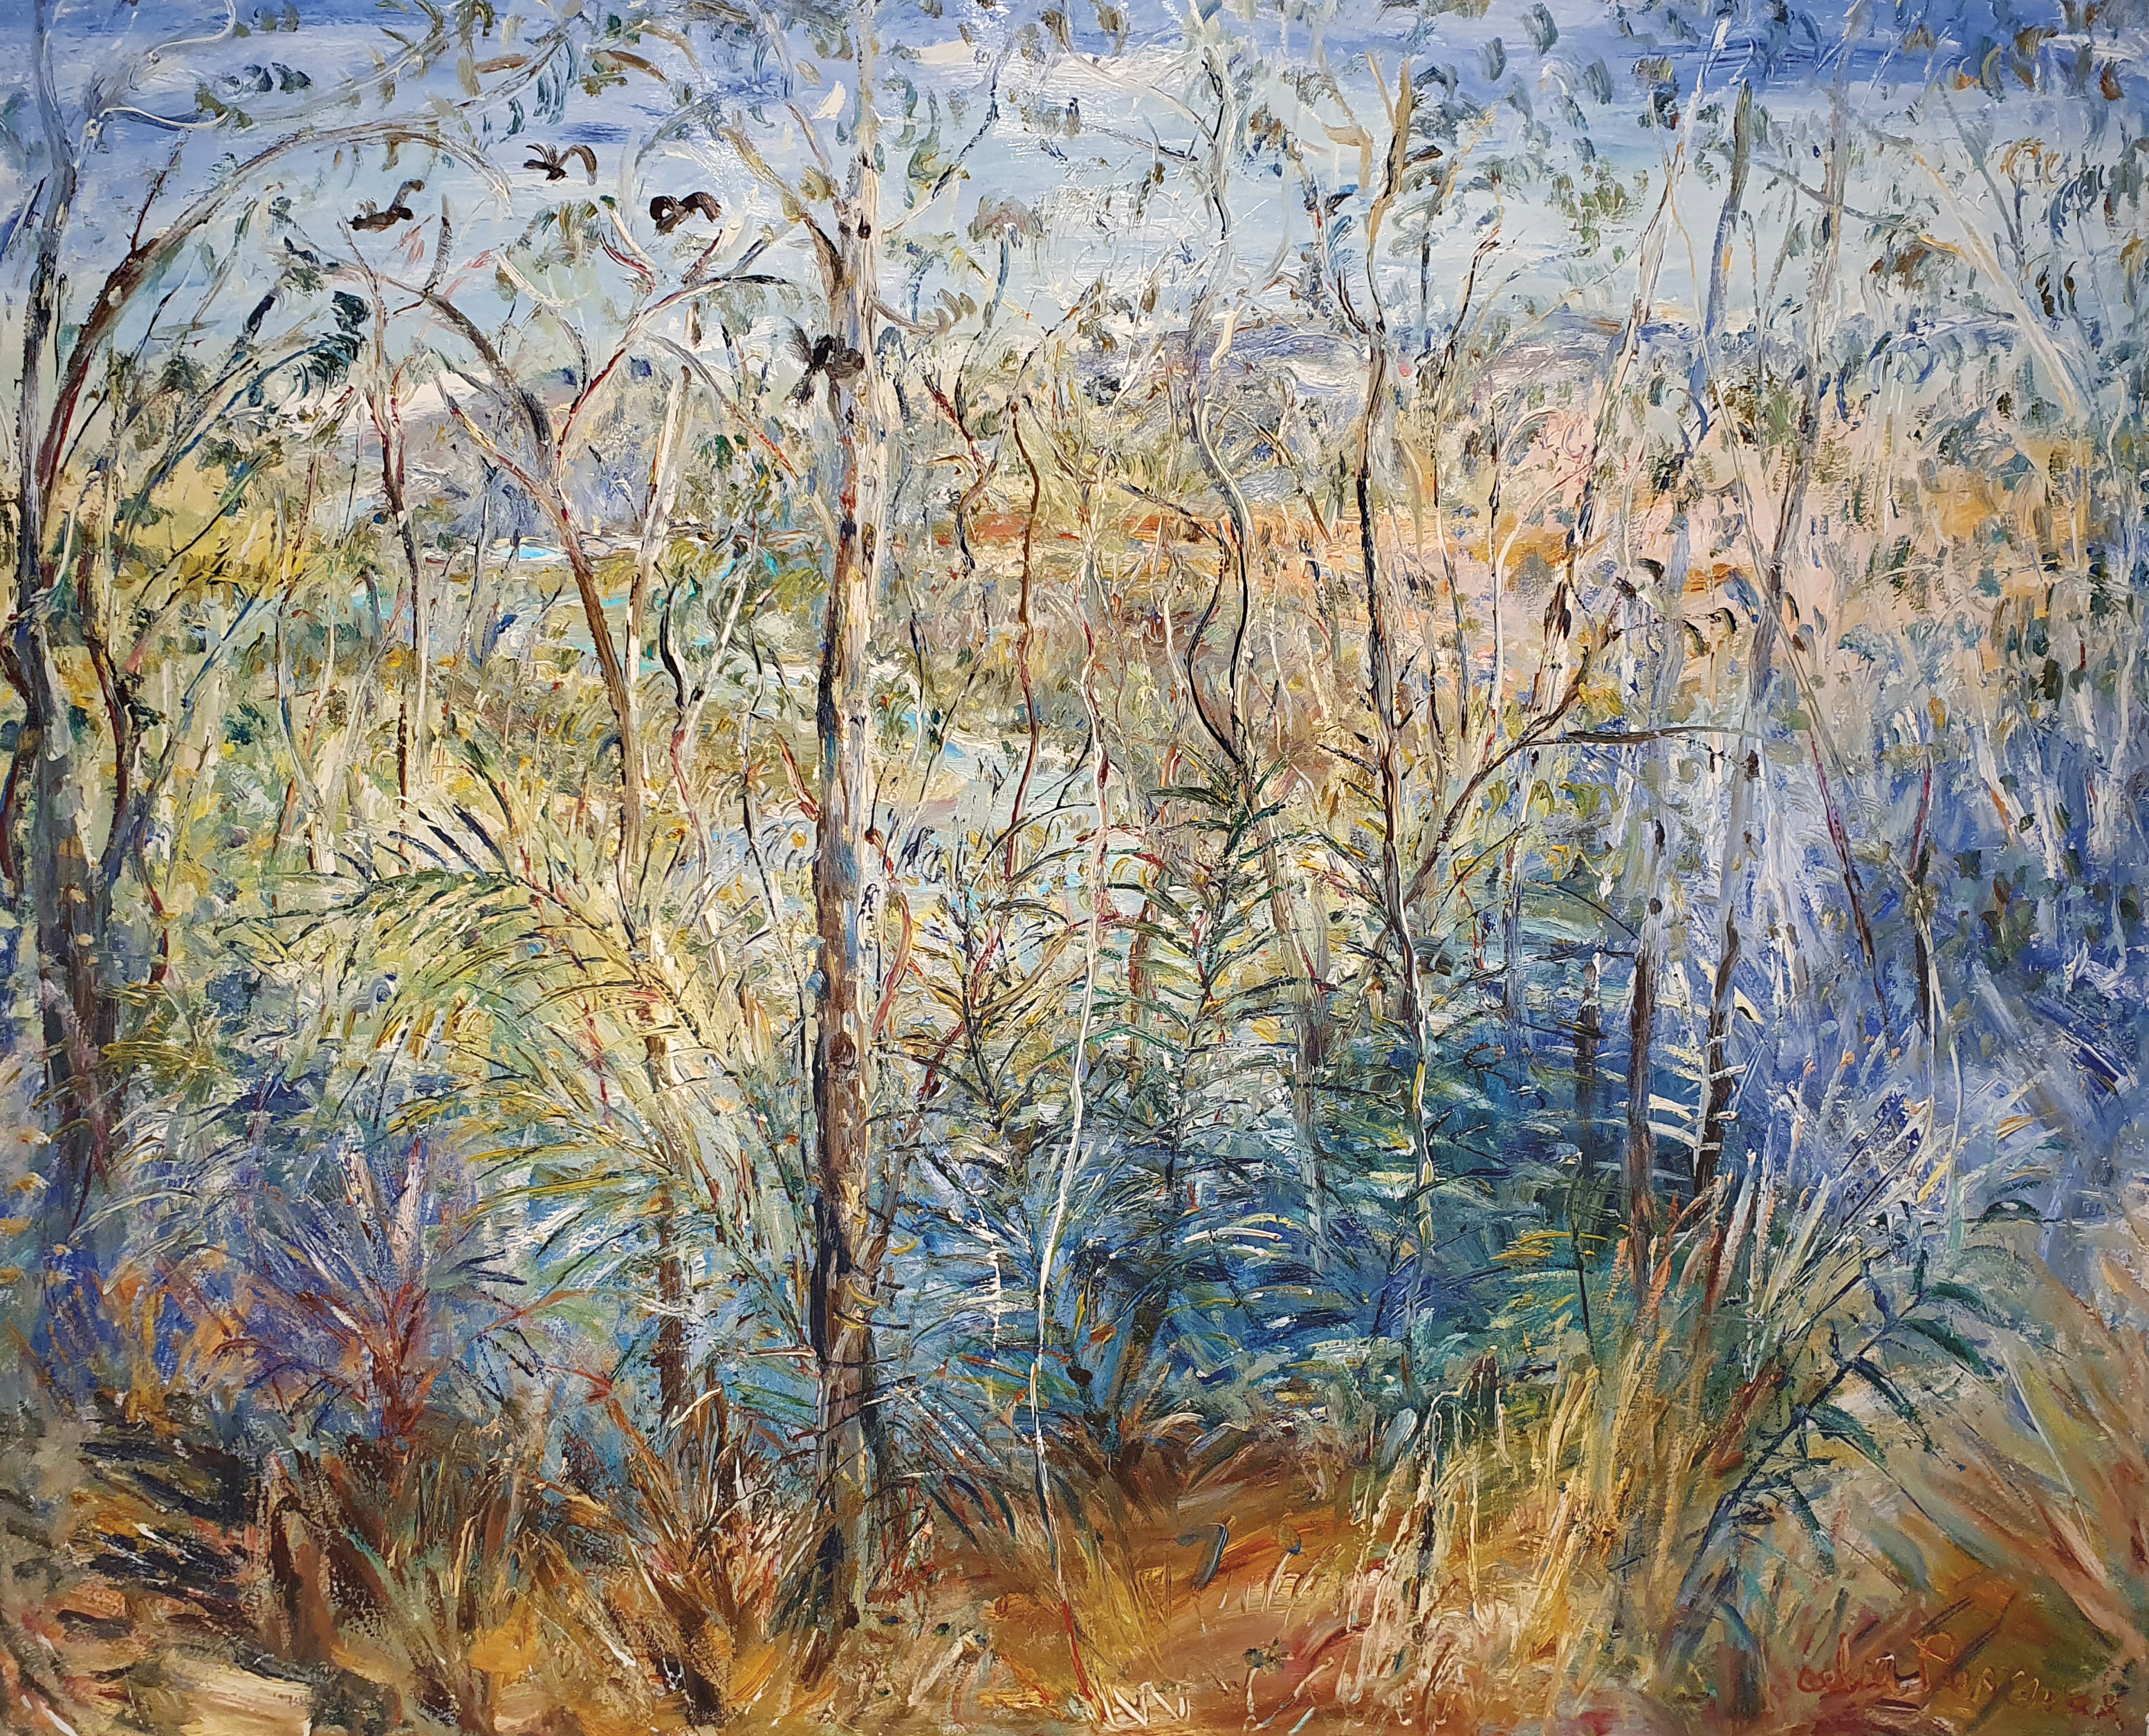 Celia Perceval- View from Eurobodalla National Park- oil on canvas - 152 x 183cm 2022